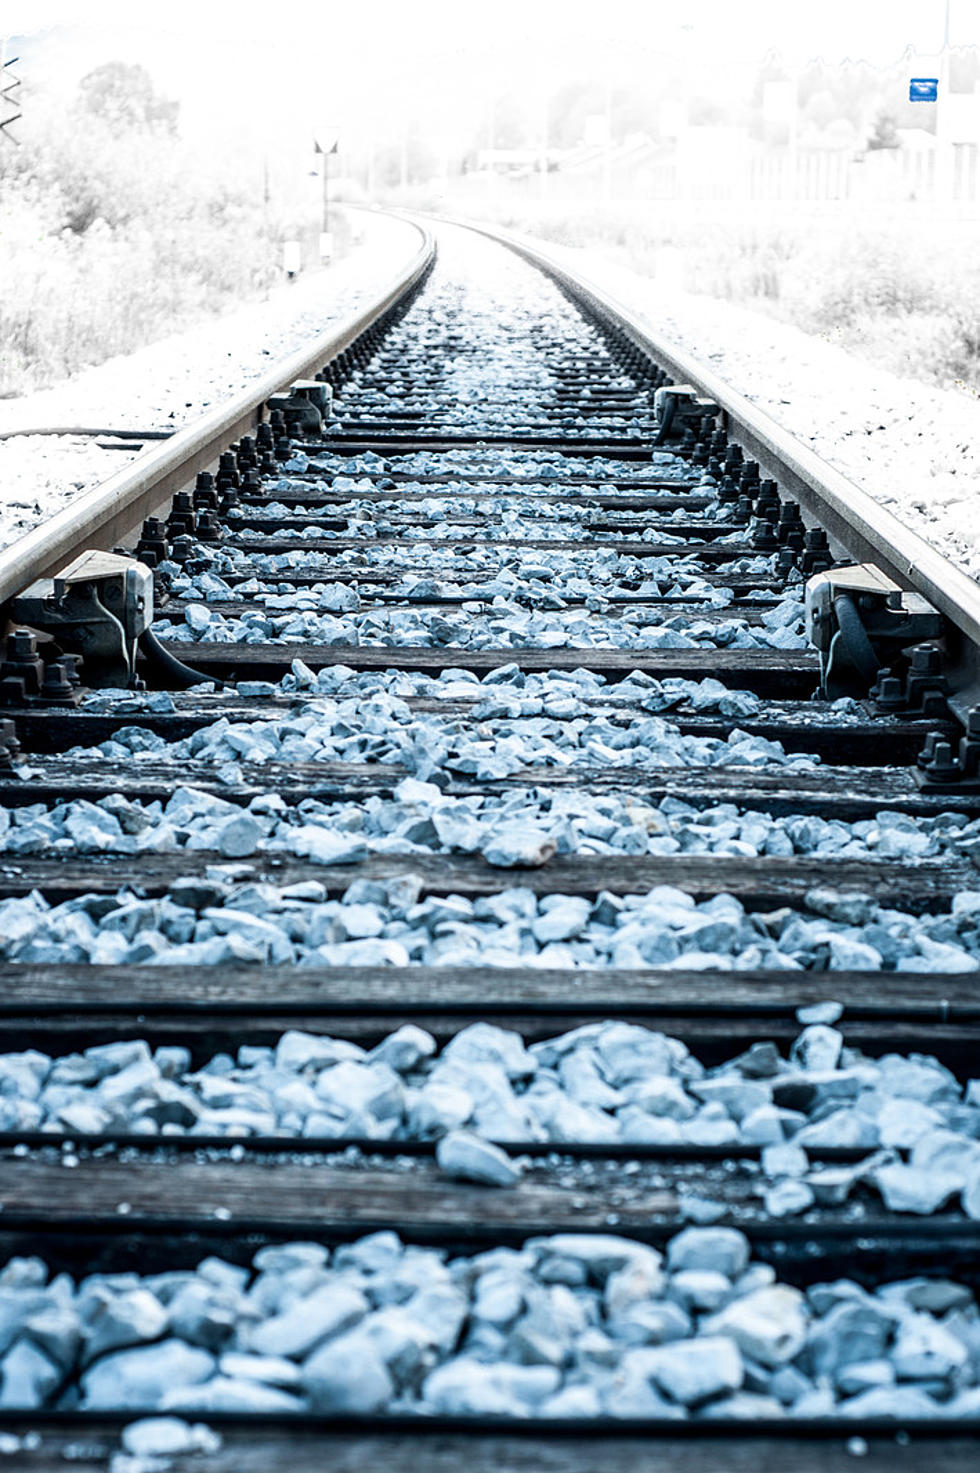 CP Railway Worker Lockout To Impact North Dakota Supply Chain?